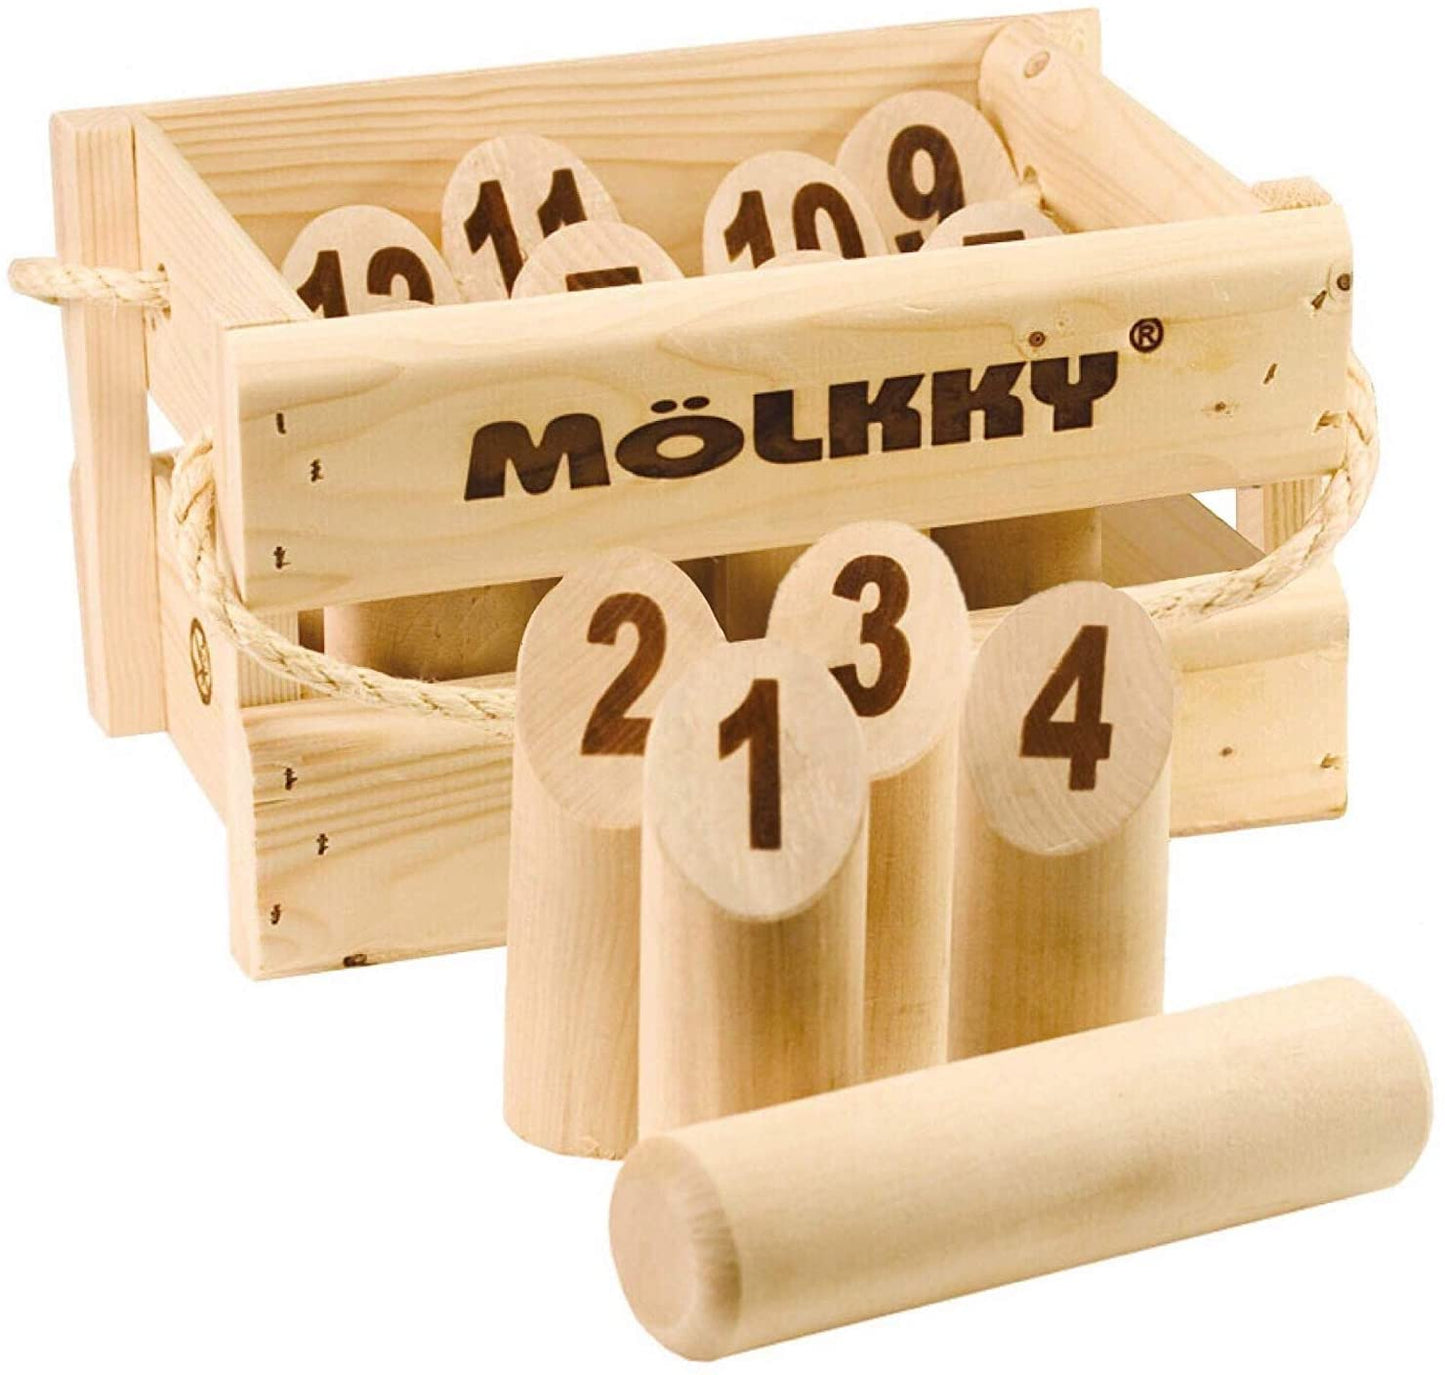 TACTIC【熱門投擲新興運動】芬蘭木柱（木棋）MOLKKY木箱套裝32*22*20cm